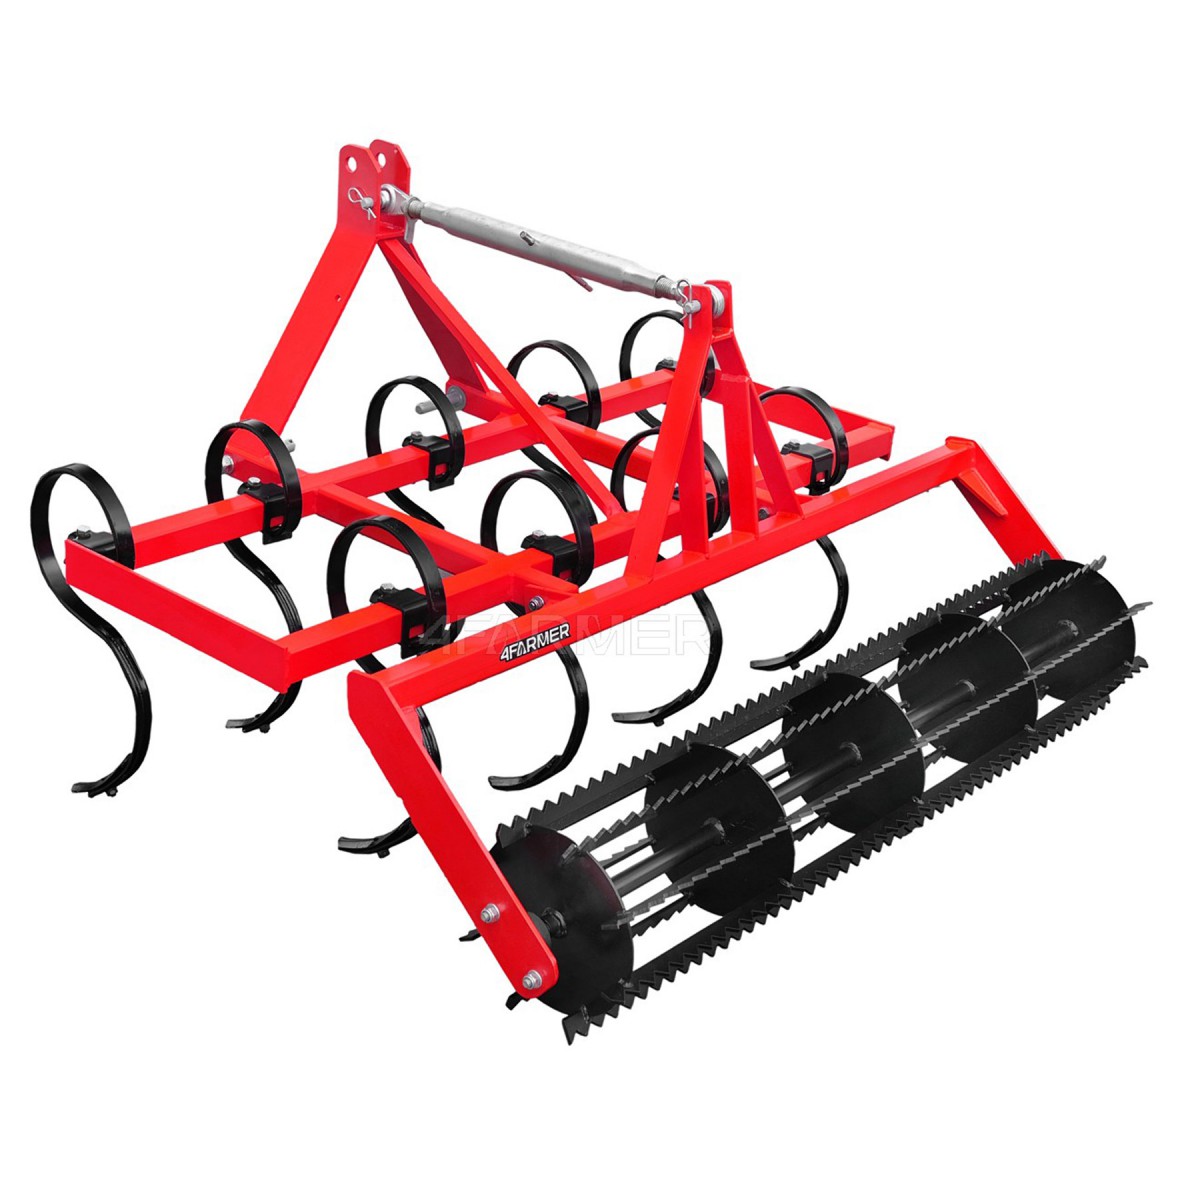 Cultivator 150 Standard + string roller 4FARMER